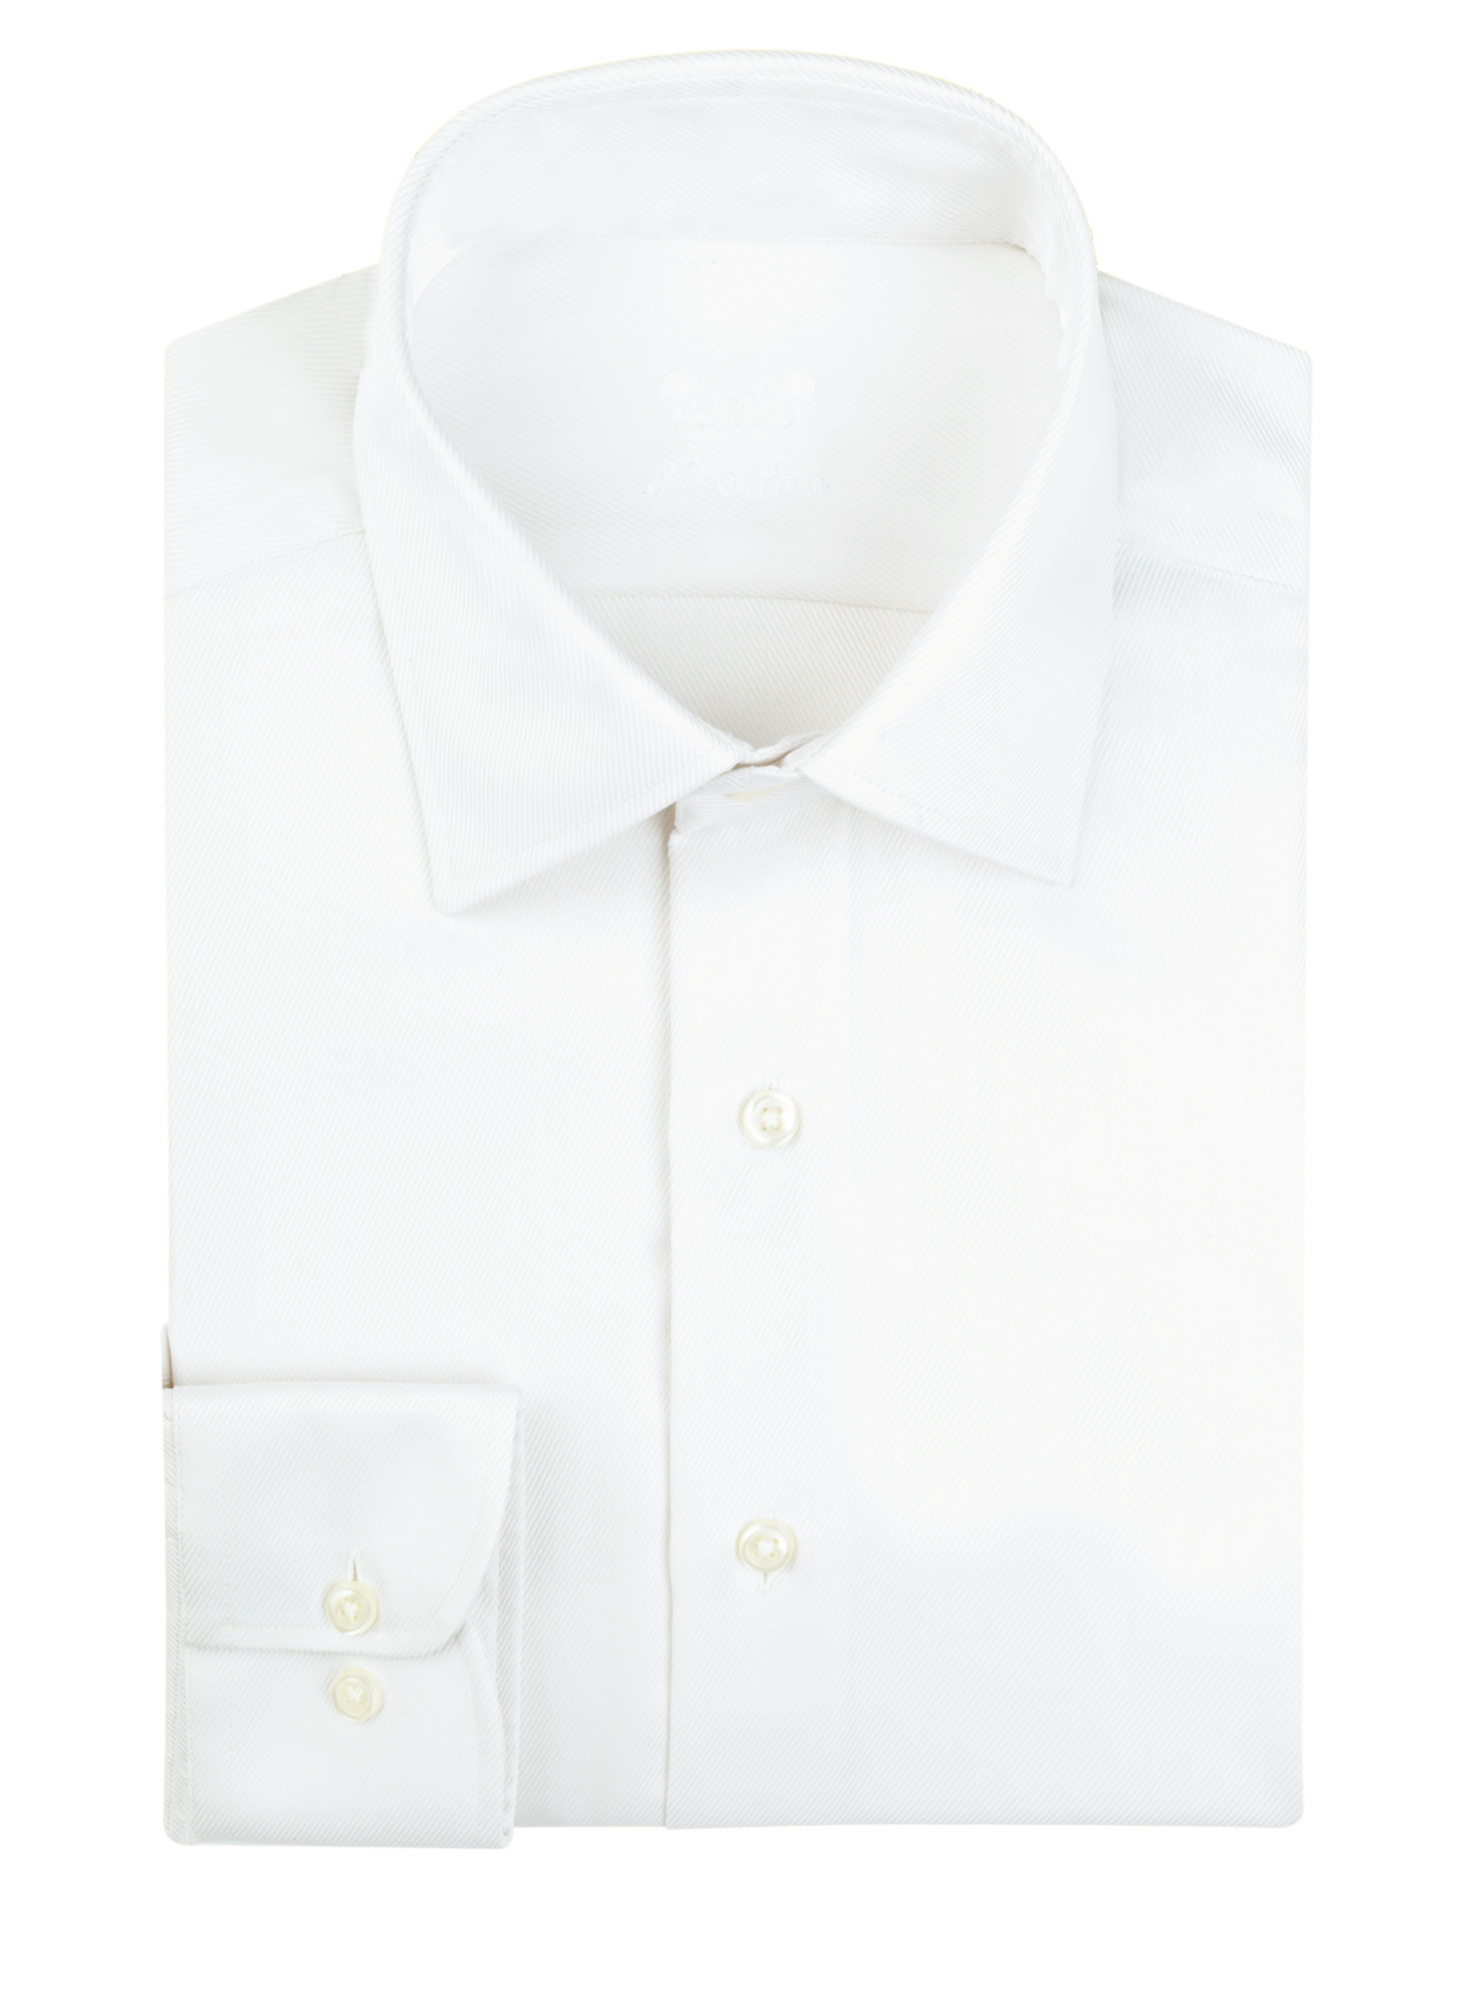 PARMA - Twill Ivory wedding tailored  shirt - ROCO 2 